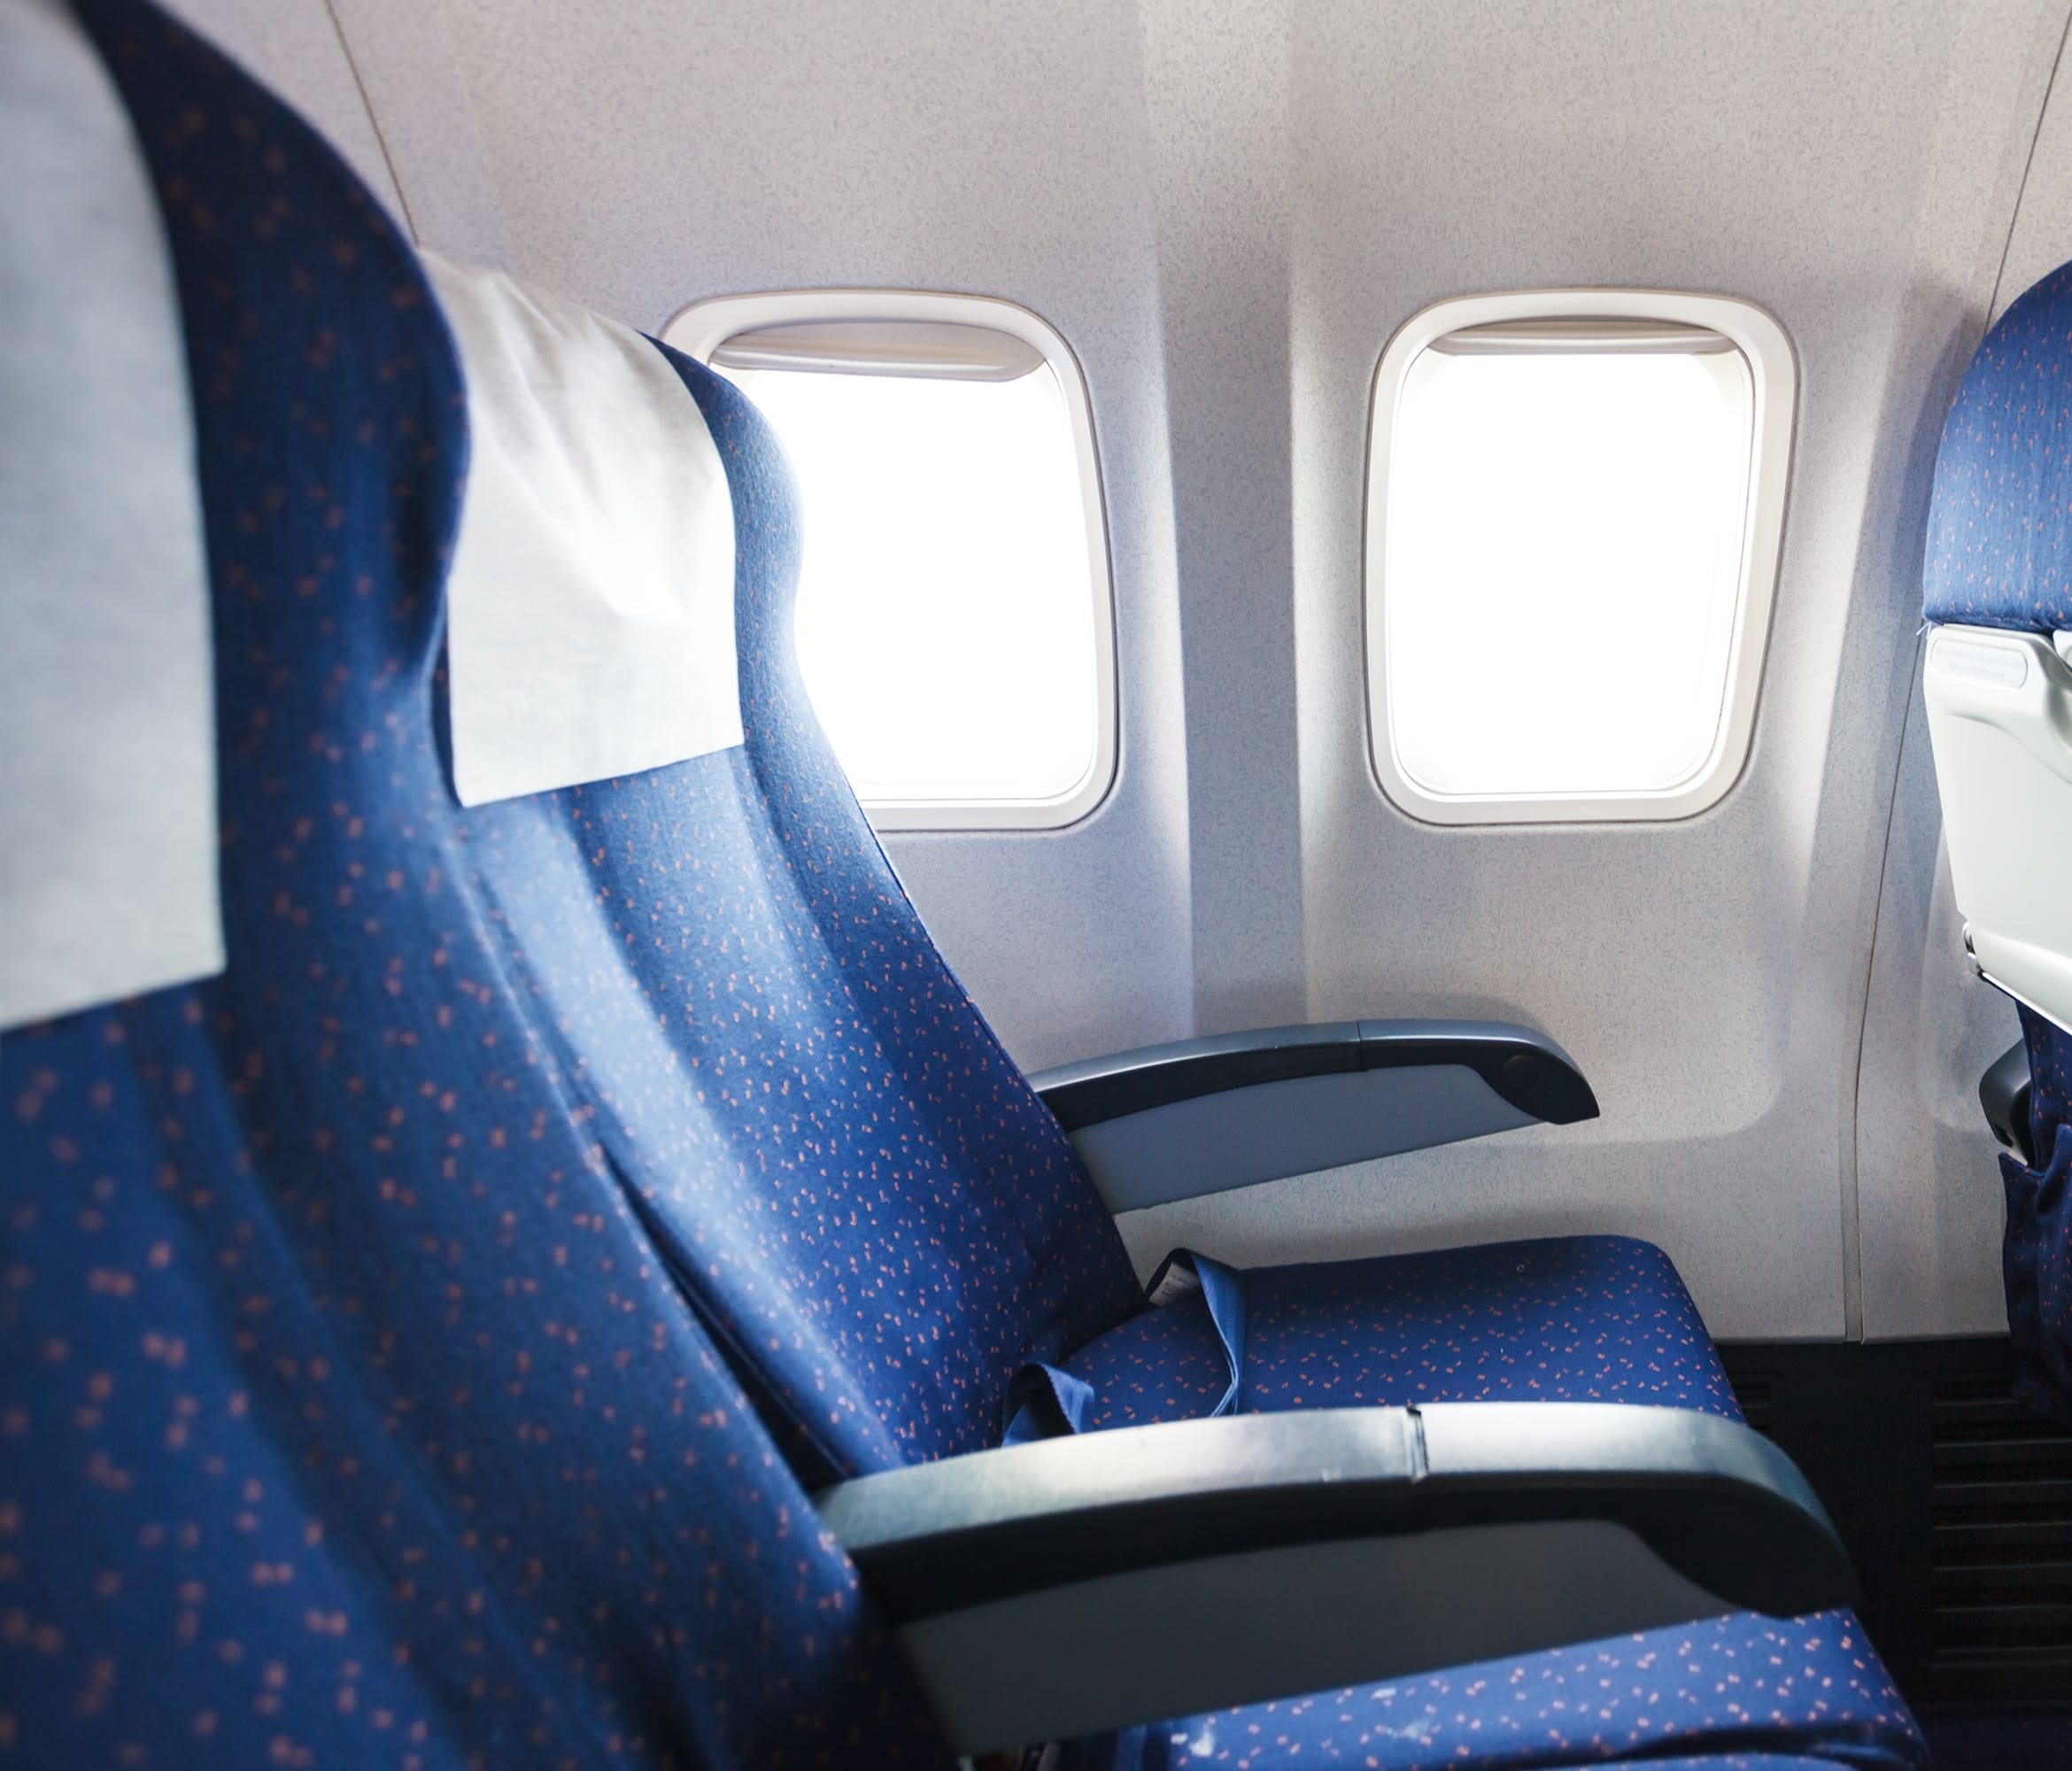 Photos of airplane seats.